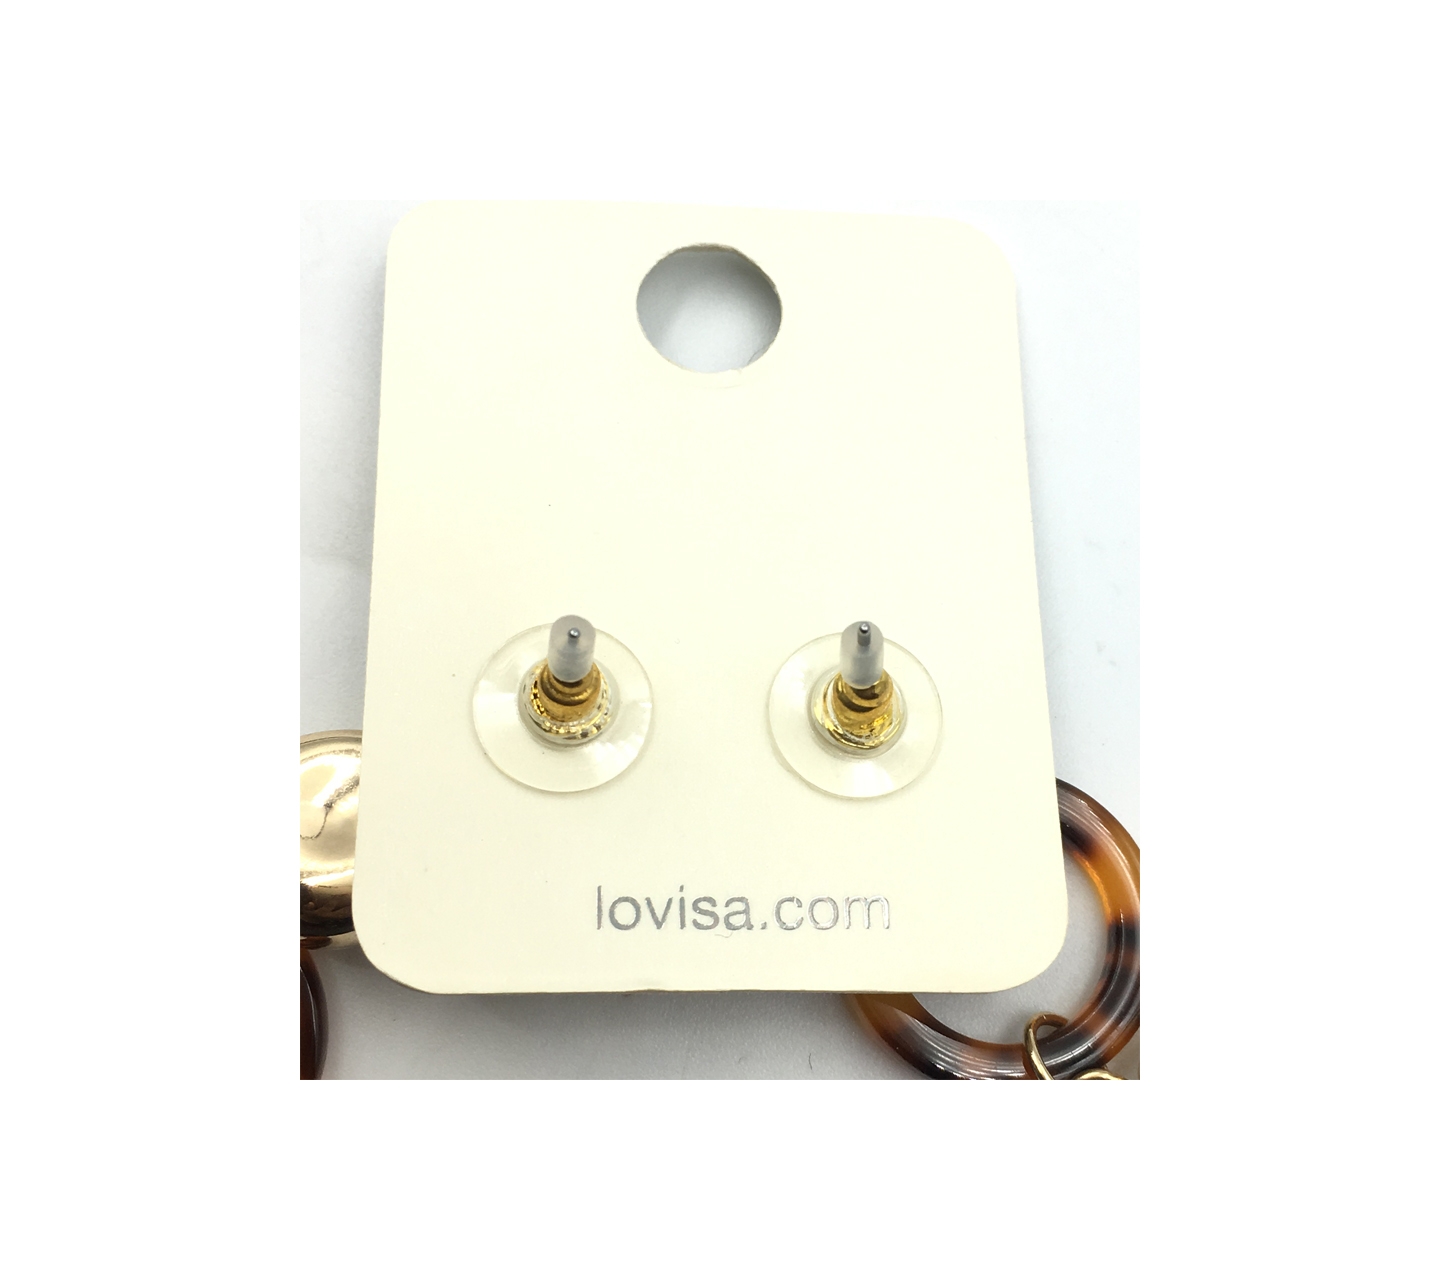 Lovisa brown gold earrings